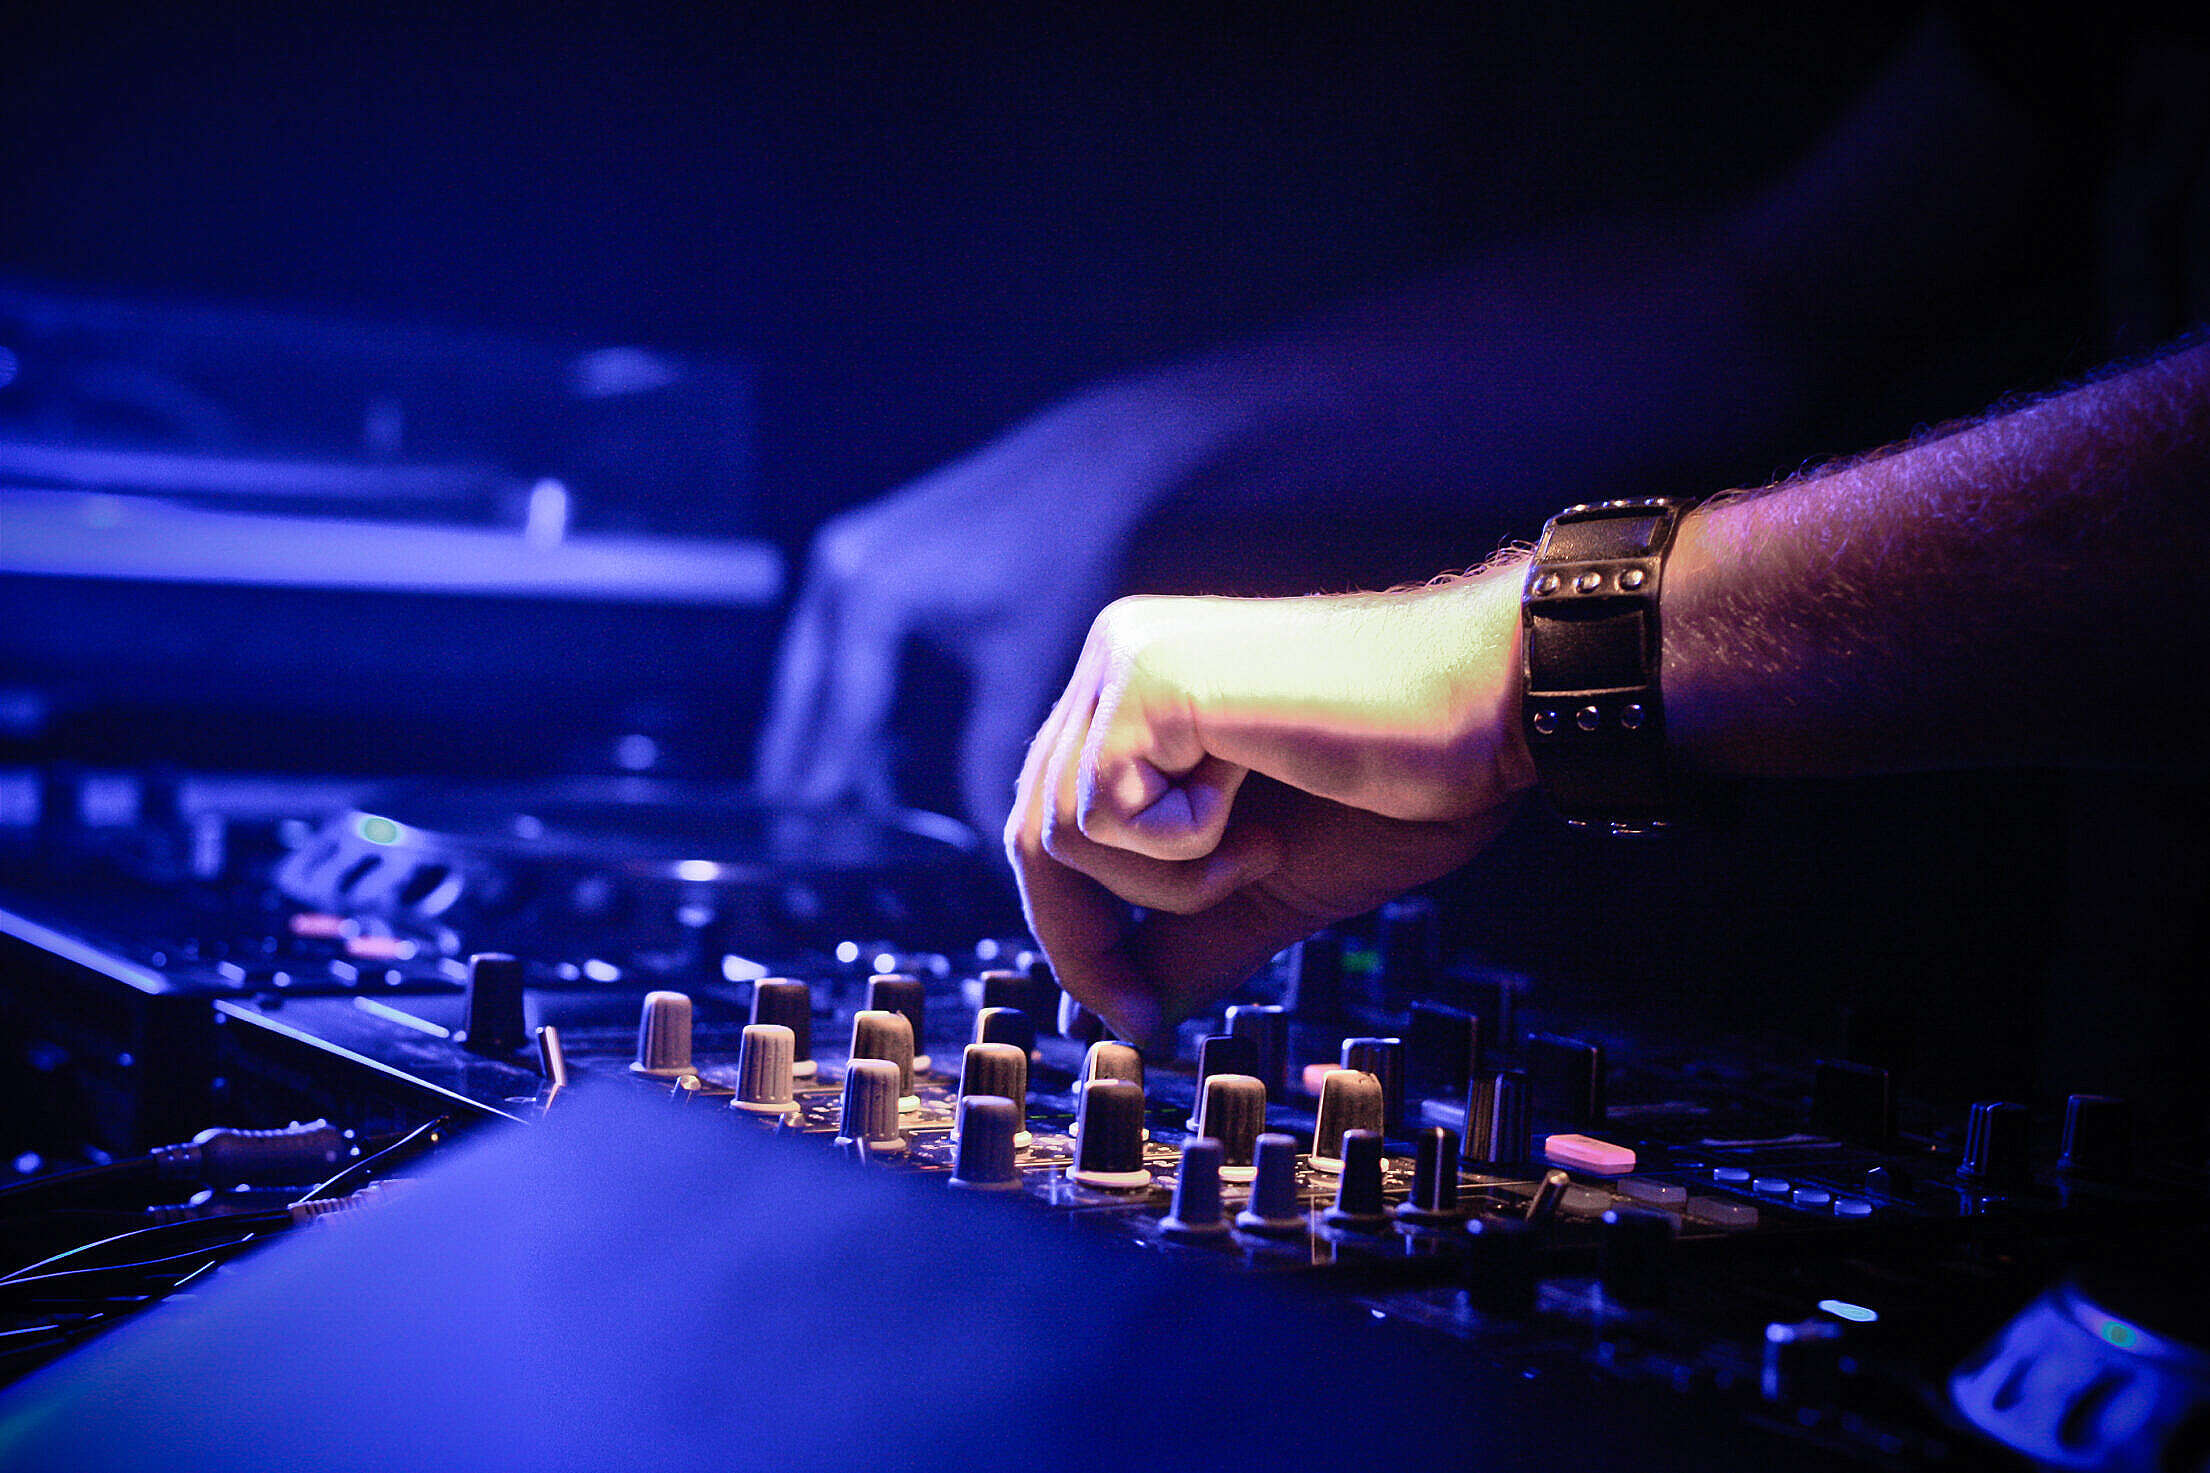 DJ In The Mix Free Stock Photo | picjumbo